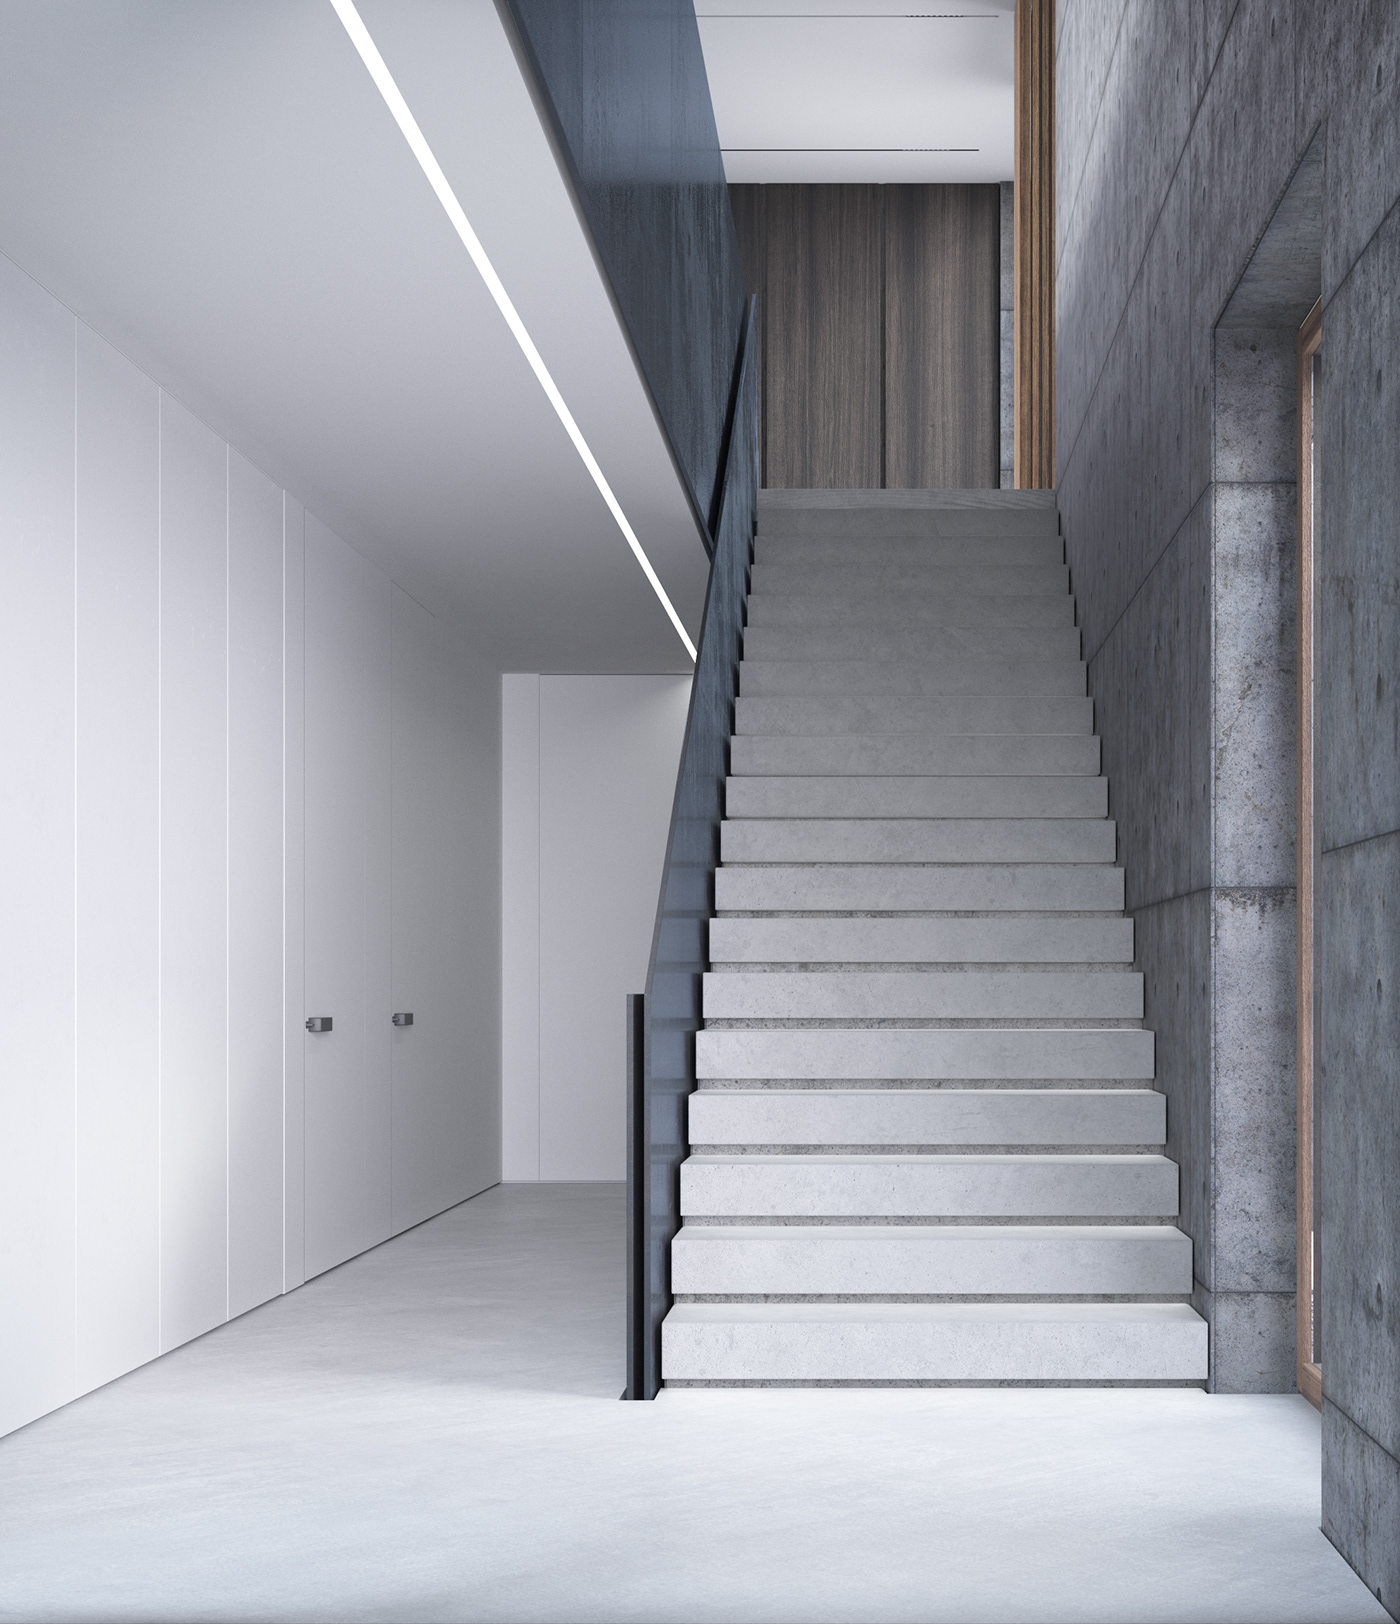 architecture Marble wood architecture interior design  3D Rendering 3ds max corona render  vray render concrete architecture